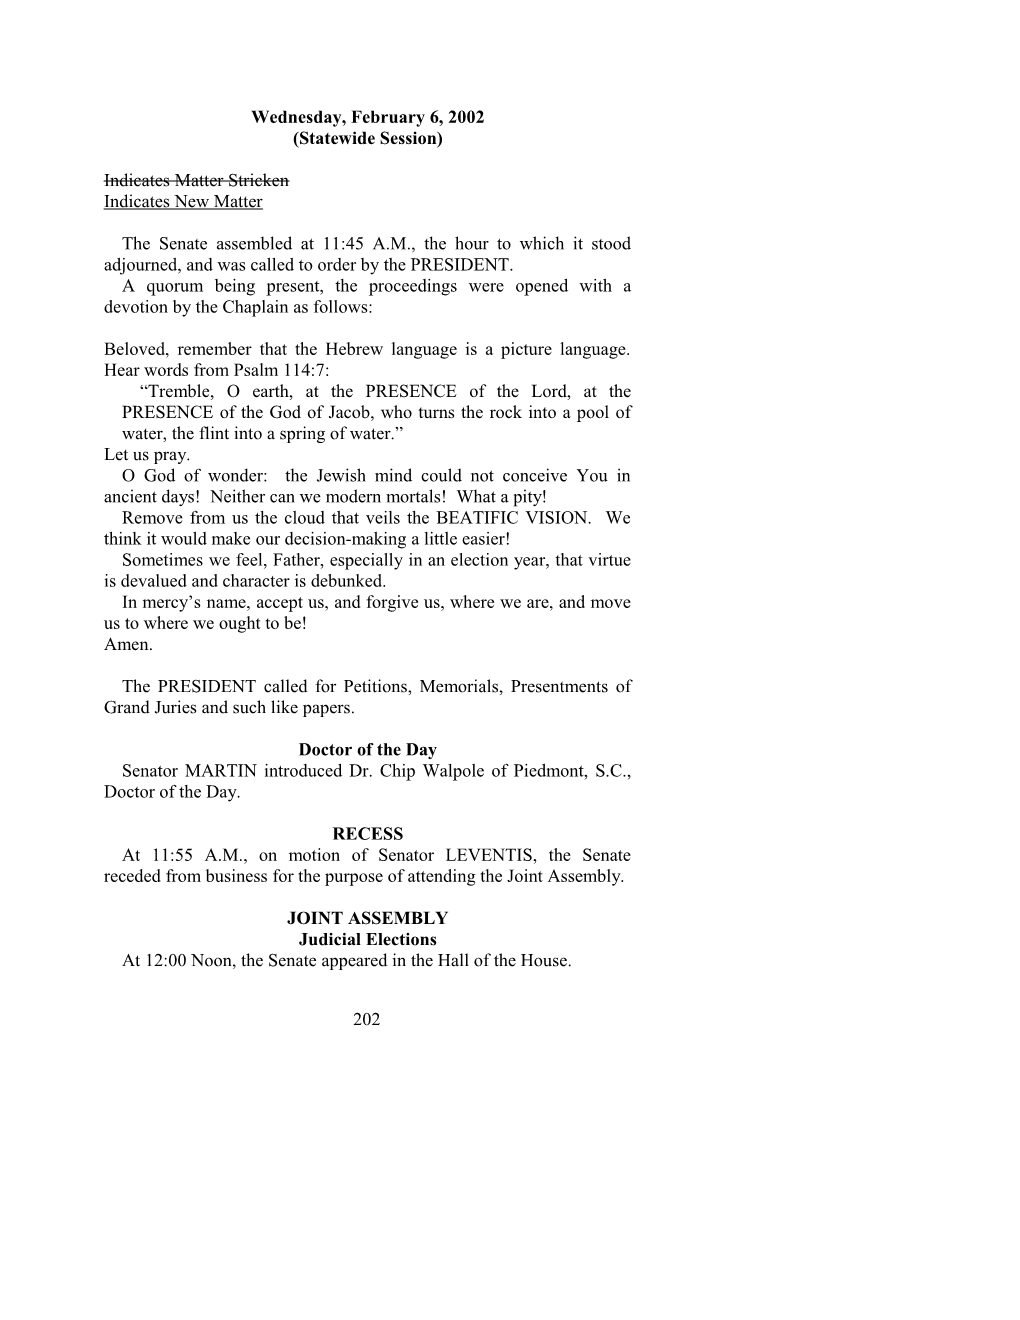 Senate Journal for Feb. 6, 2002 - South Carolina Legislature Online